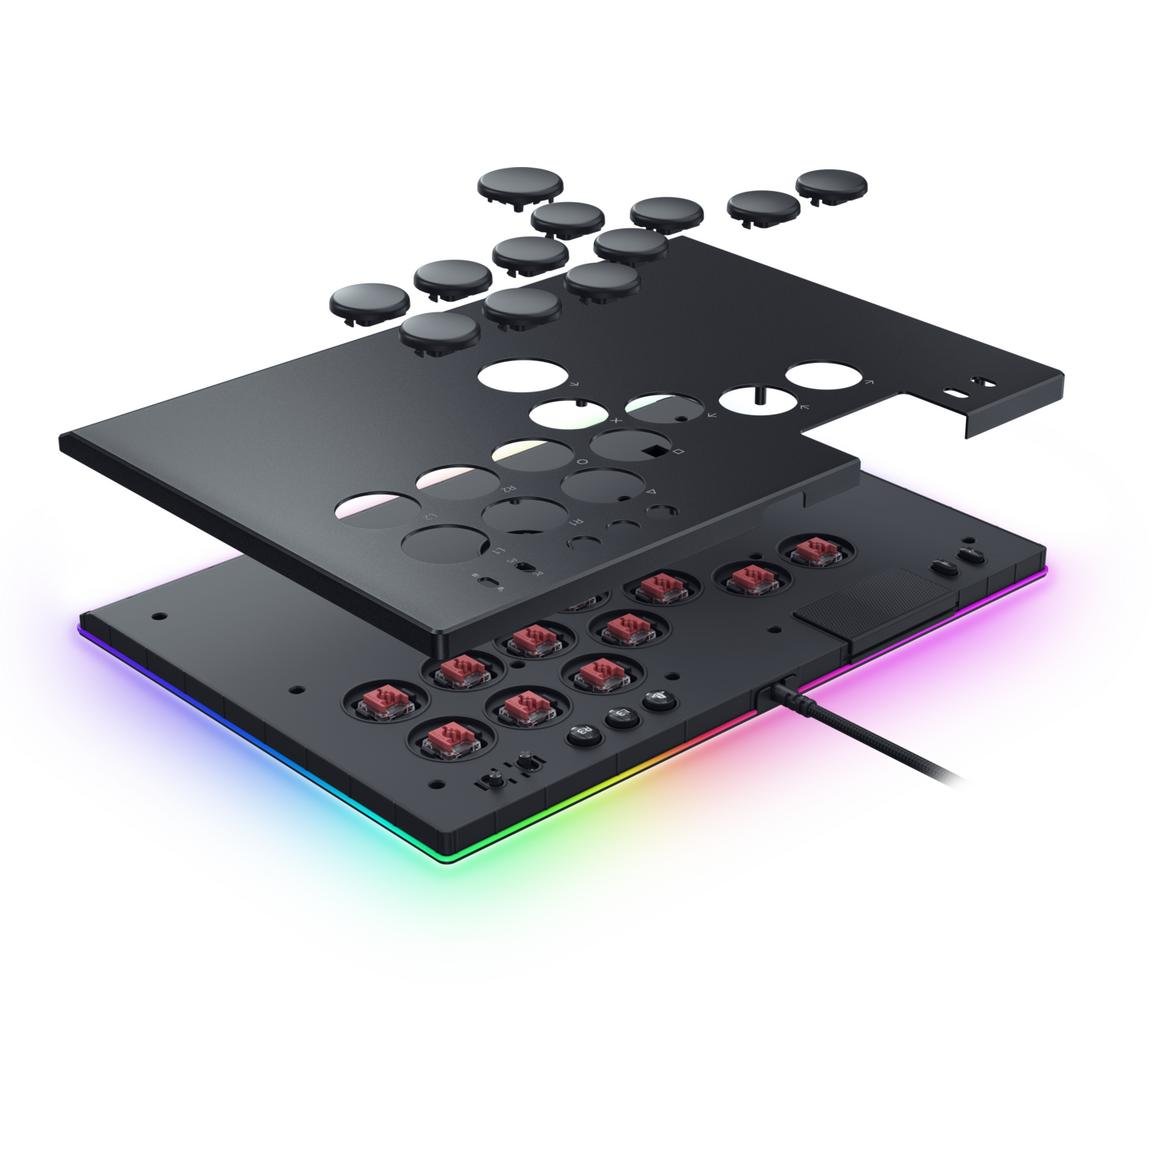 Razer Kitsune All-Button Optical Arcade Controller (PS5/PC) up for preorder at GameStop ($299.99-$329.99) bit.ly/45BIwQu

Chun-Li bit.ly/42fXsB2
Cammy bit.ly/3MRbinw
Standard bit.ly/3MI08Sa #ad